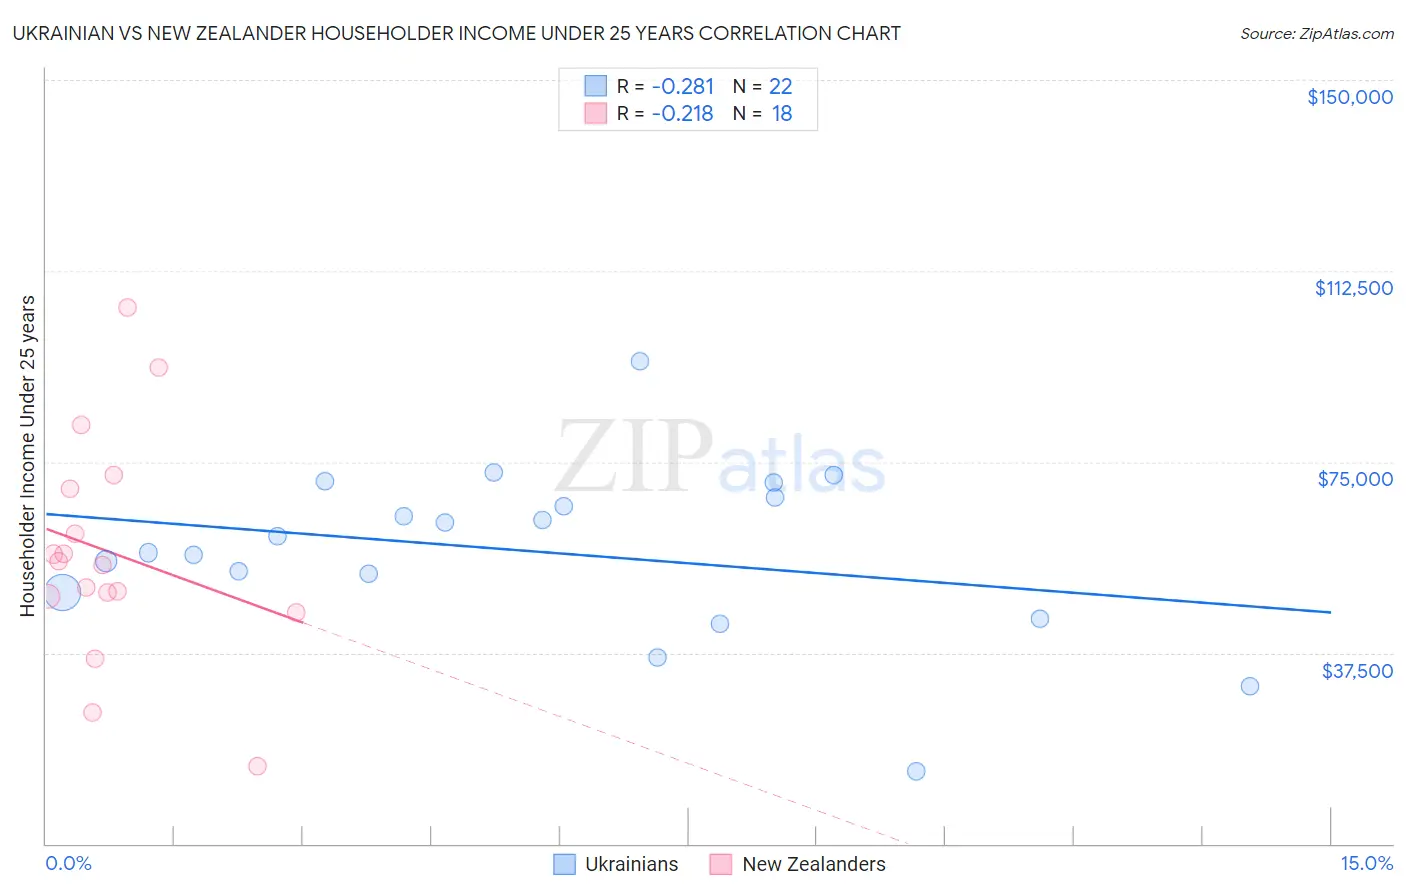 Ukrainian vs New Zealander Householder Income Under 25 years